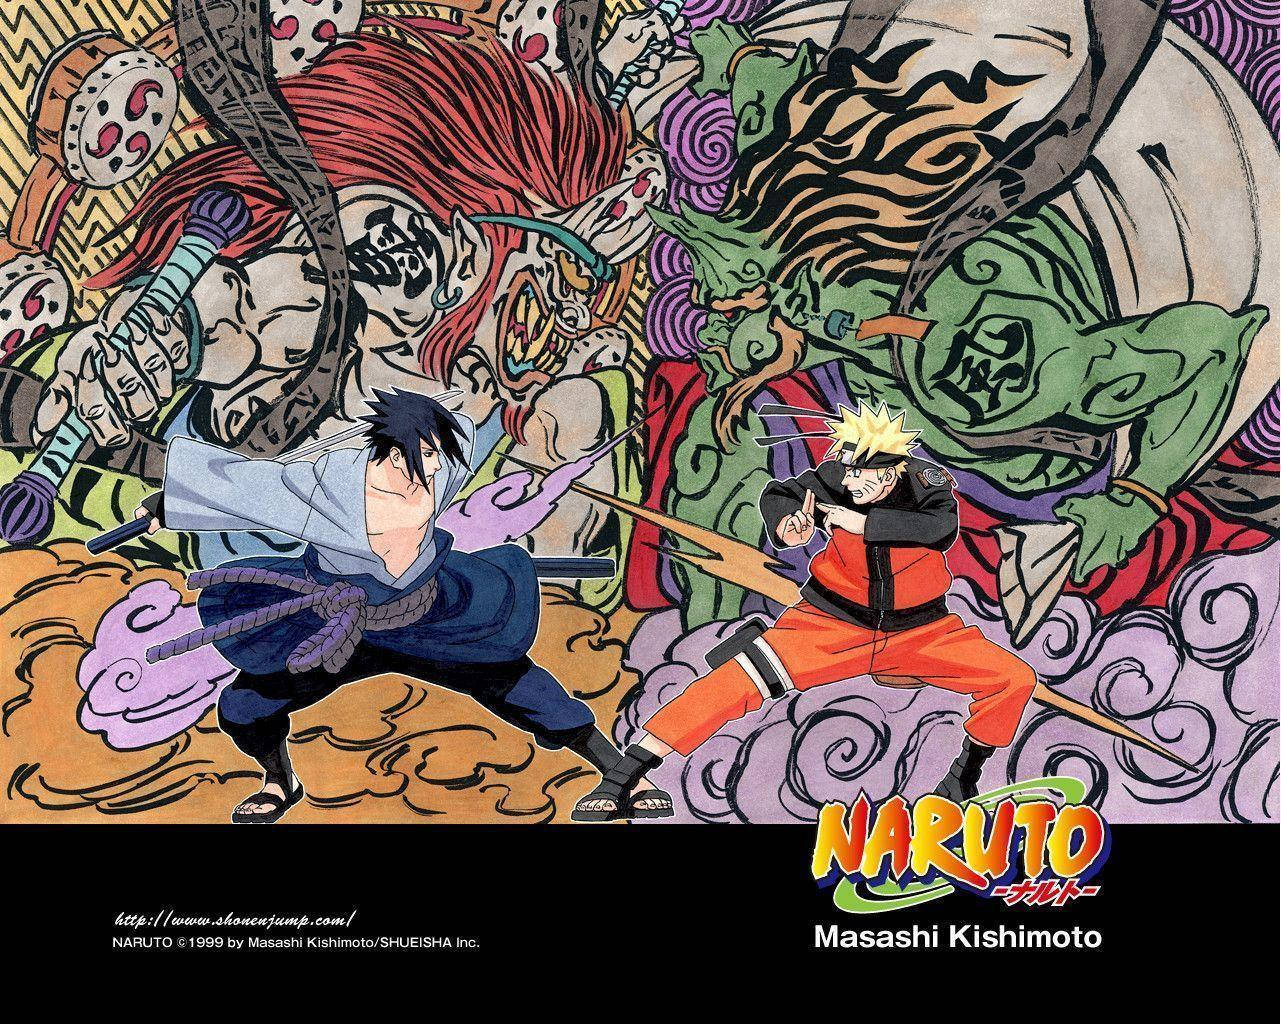 Manga Art Of Naruto Vs Sasuke